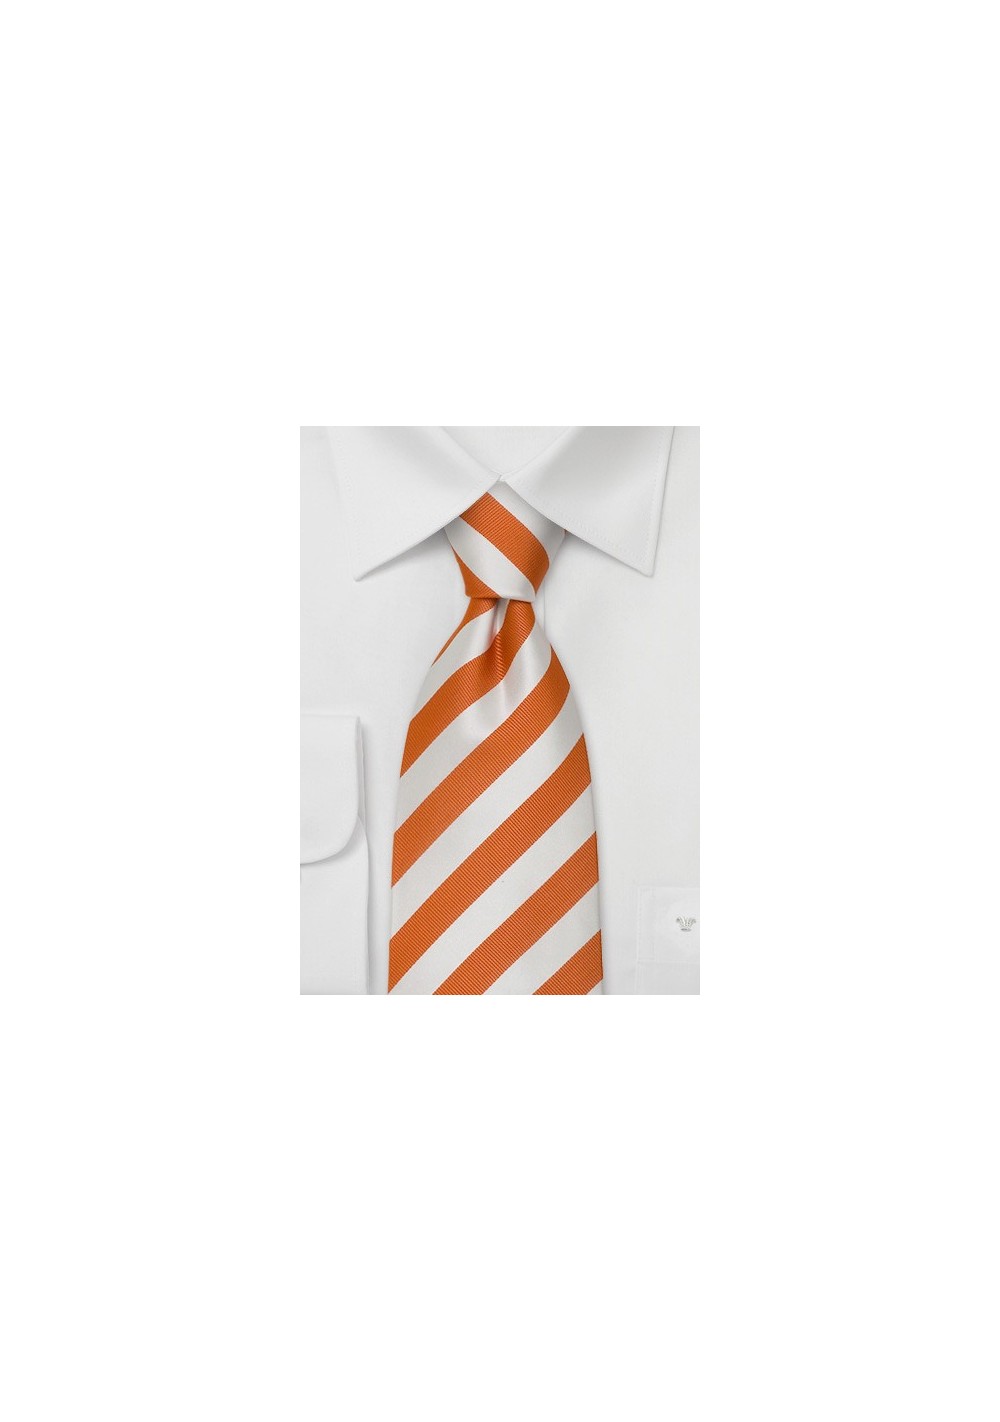 Orange Neckties - Orange and white striped tie